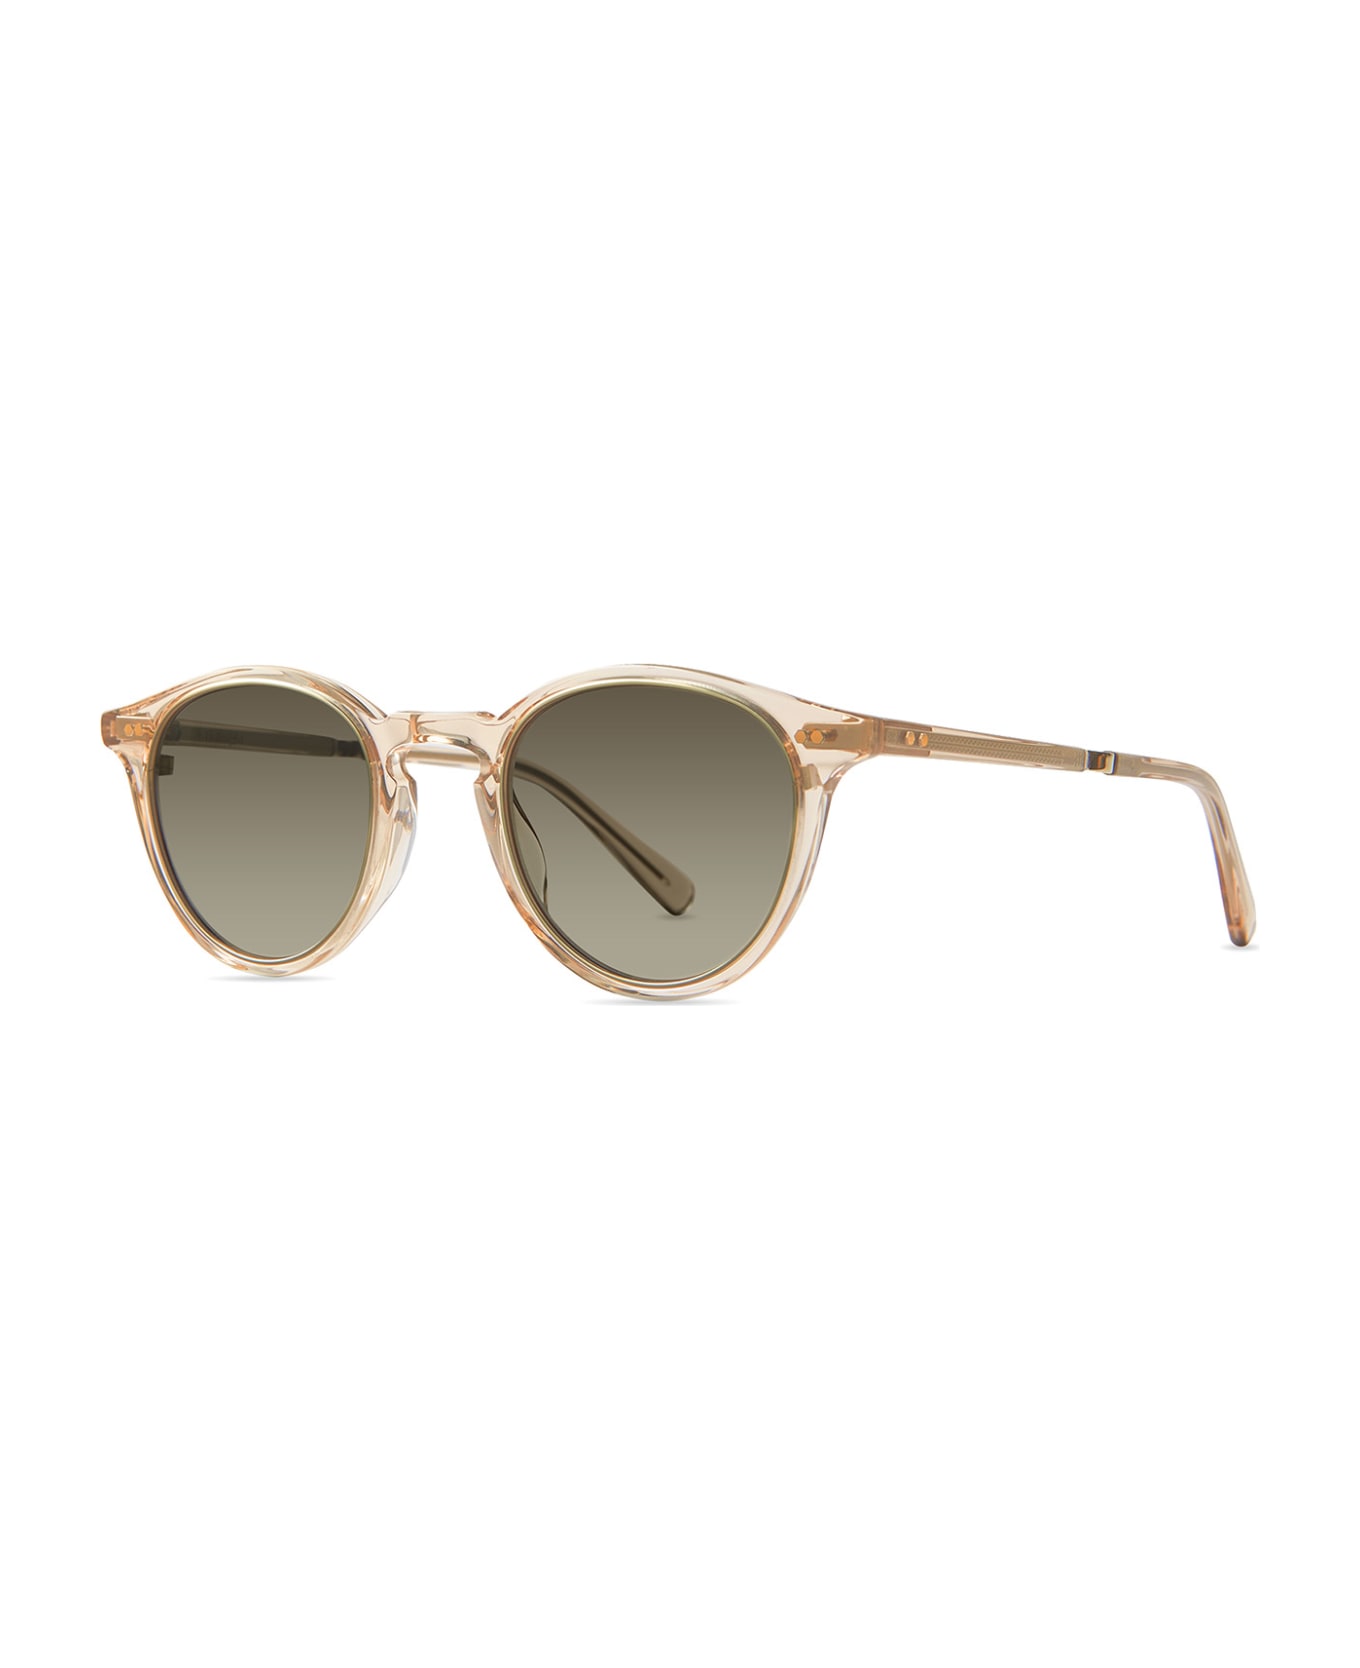 Mr. Leight Marmont Ii S Dune-white Gold Sunglasses - Dune-White Gold